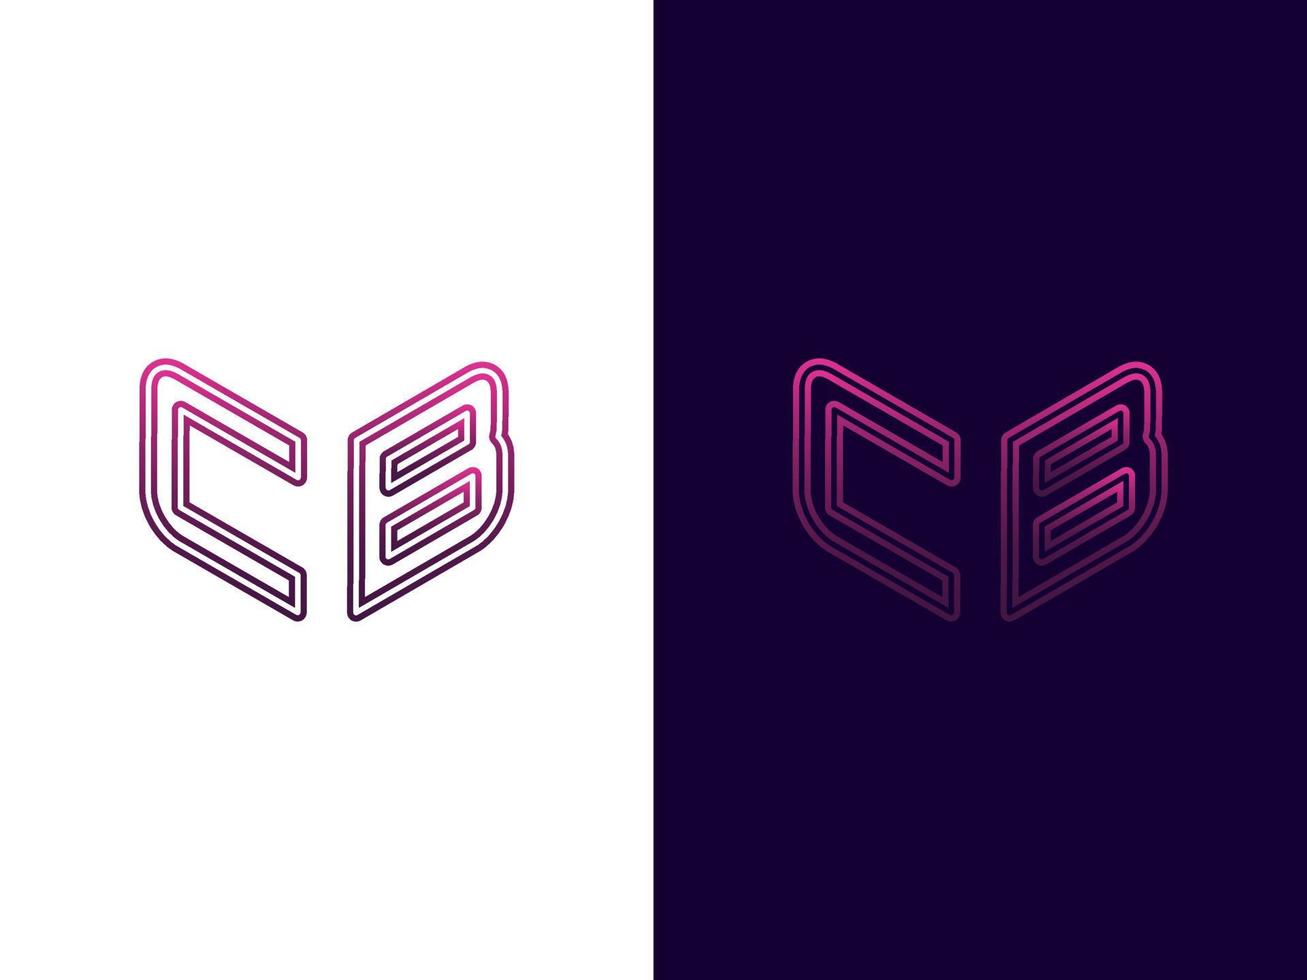 Initial letter CB minimalist and modern 3D logo design vector